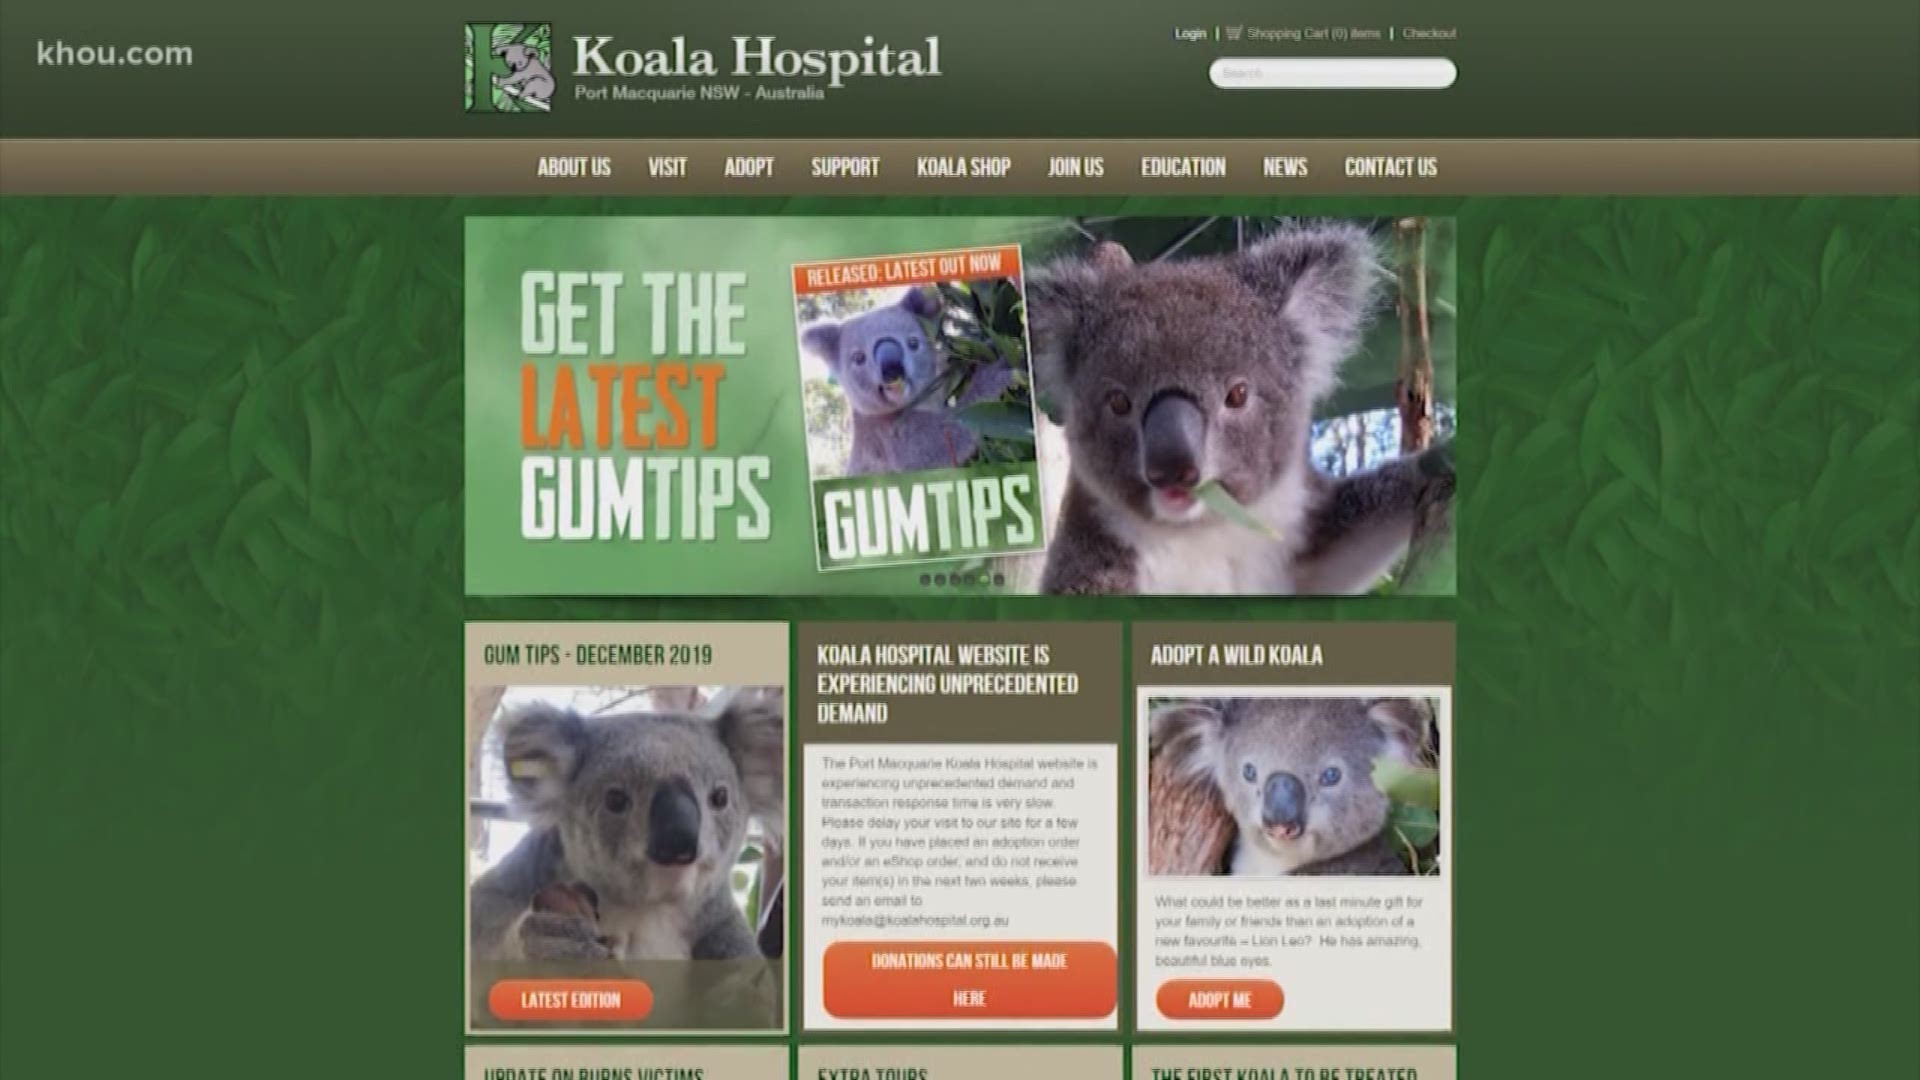 Is the Koala Hospital a legitimate charity?